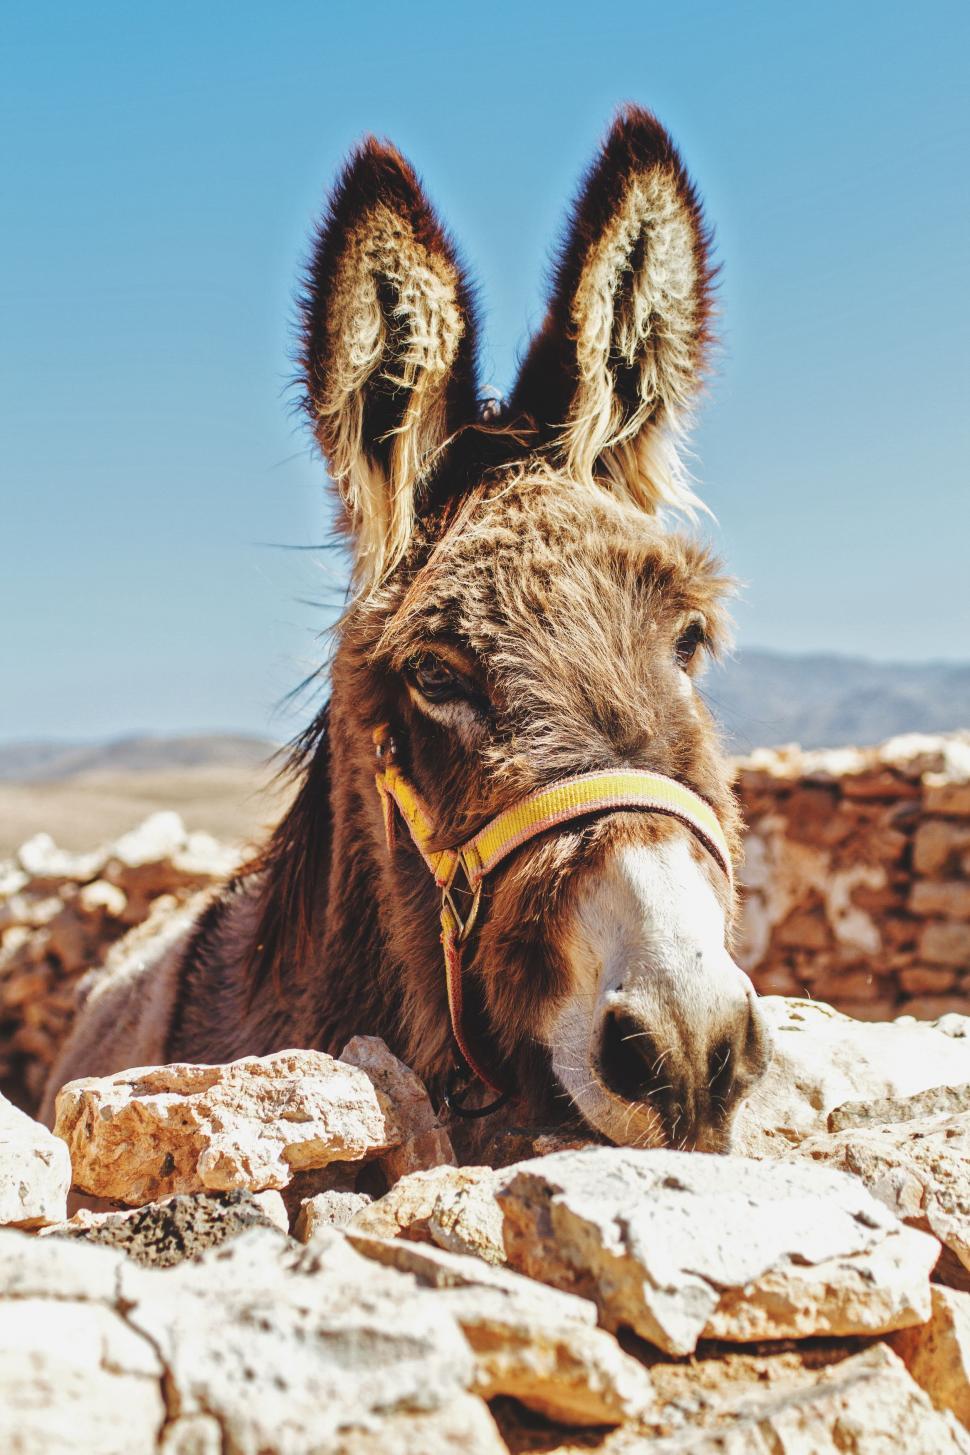 Free Image of Donkey Resting on Rocky Surface 